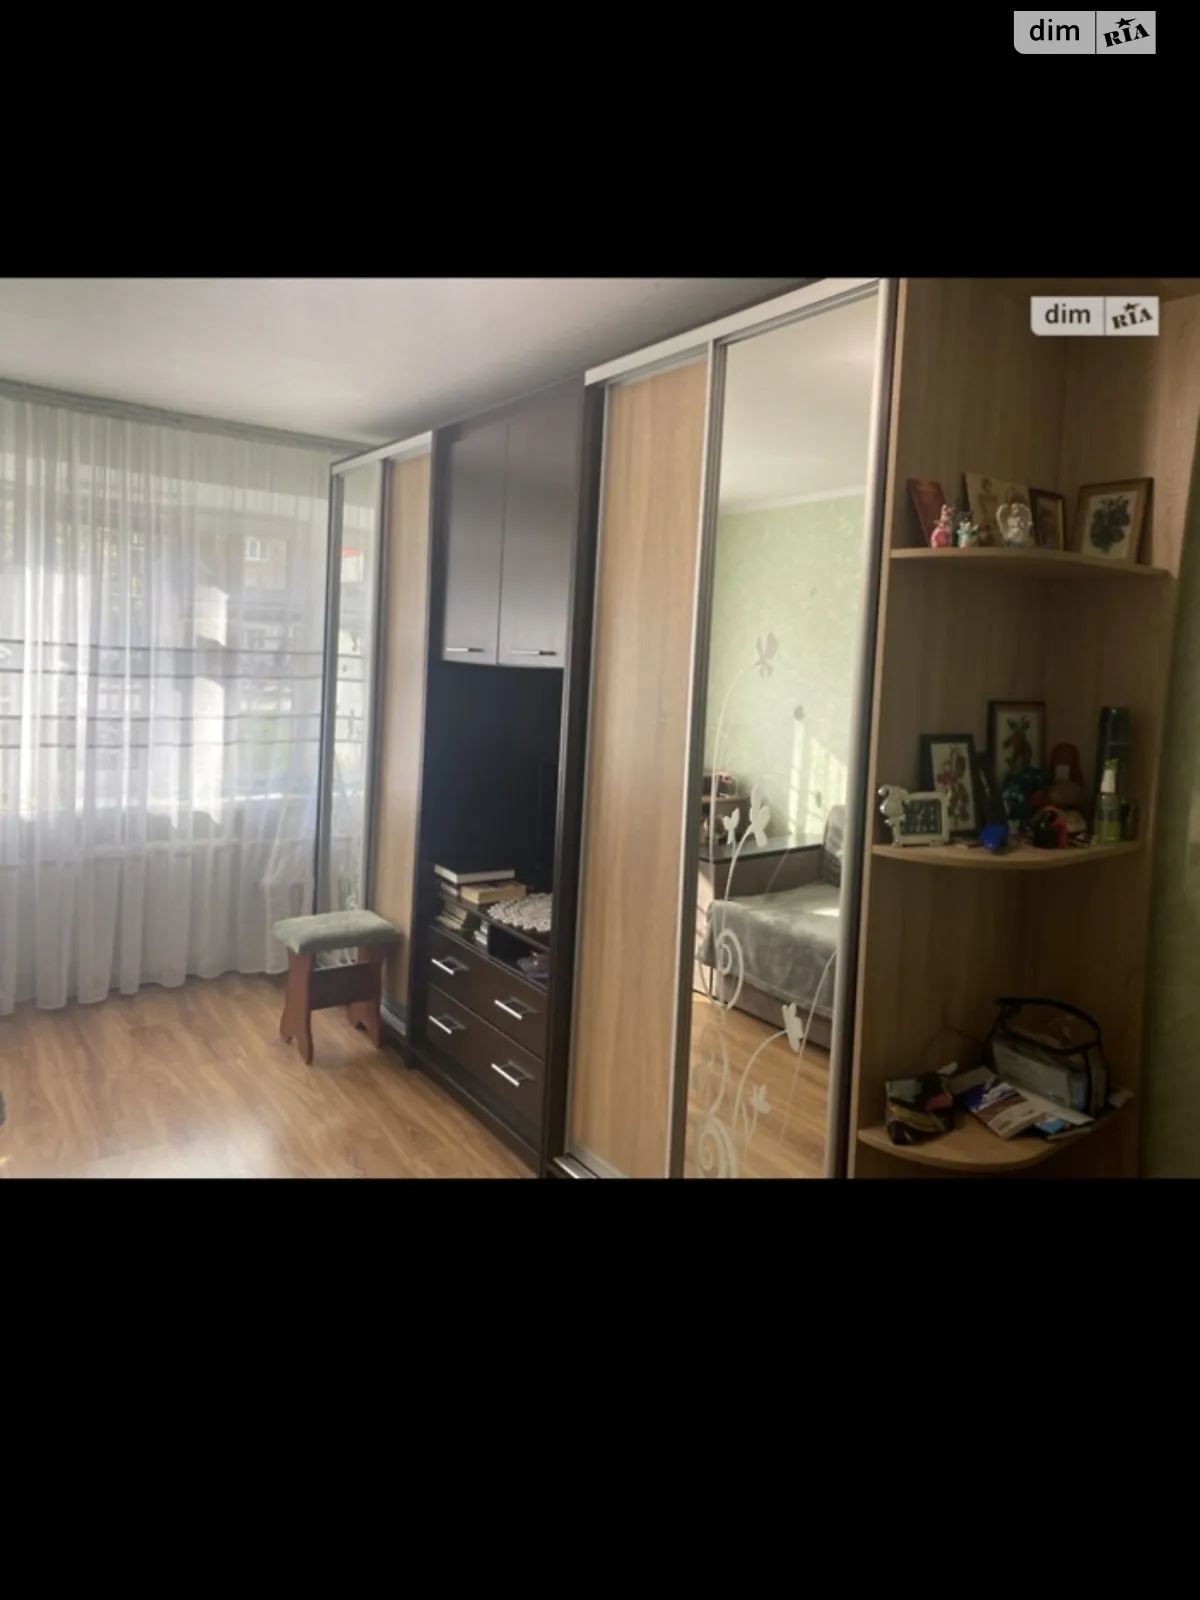 Продается комната 28 кв. м в Виннице, цена: 17500 $ - фото 1